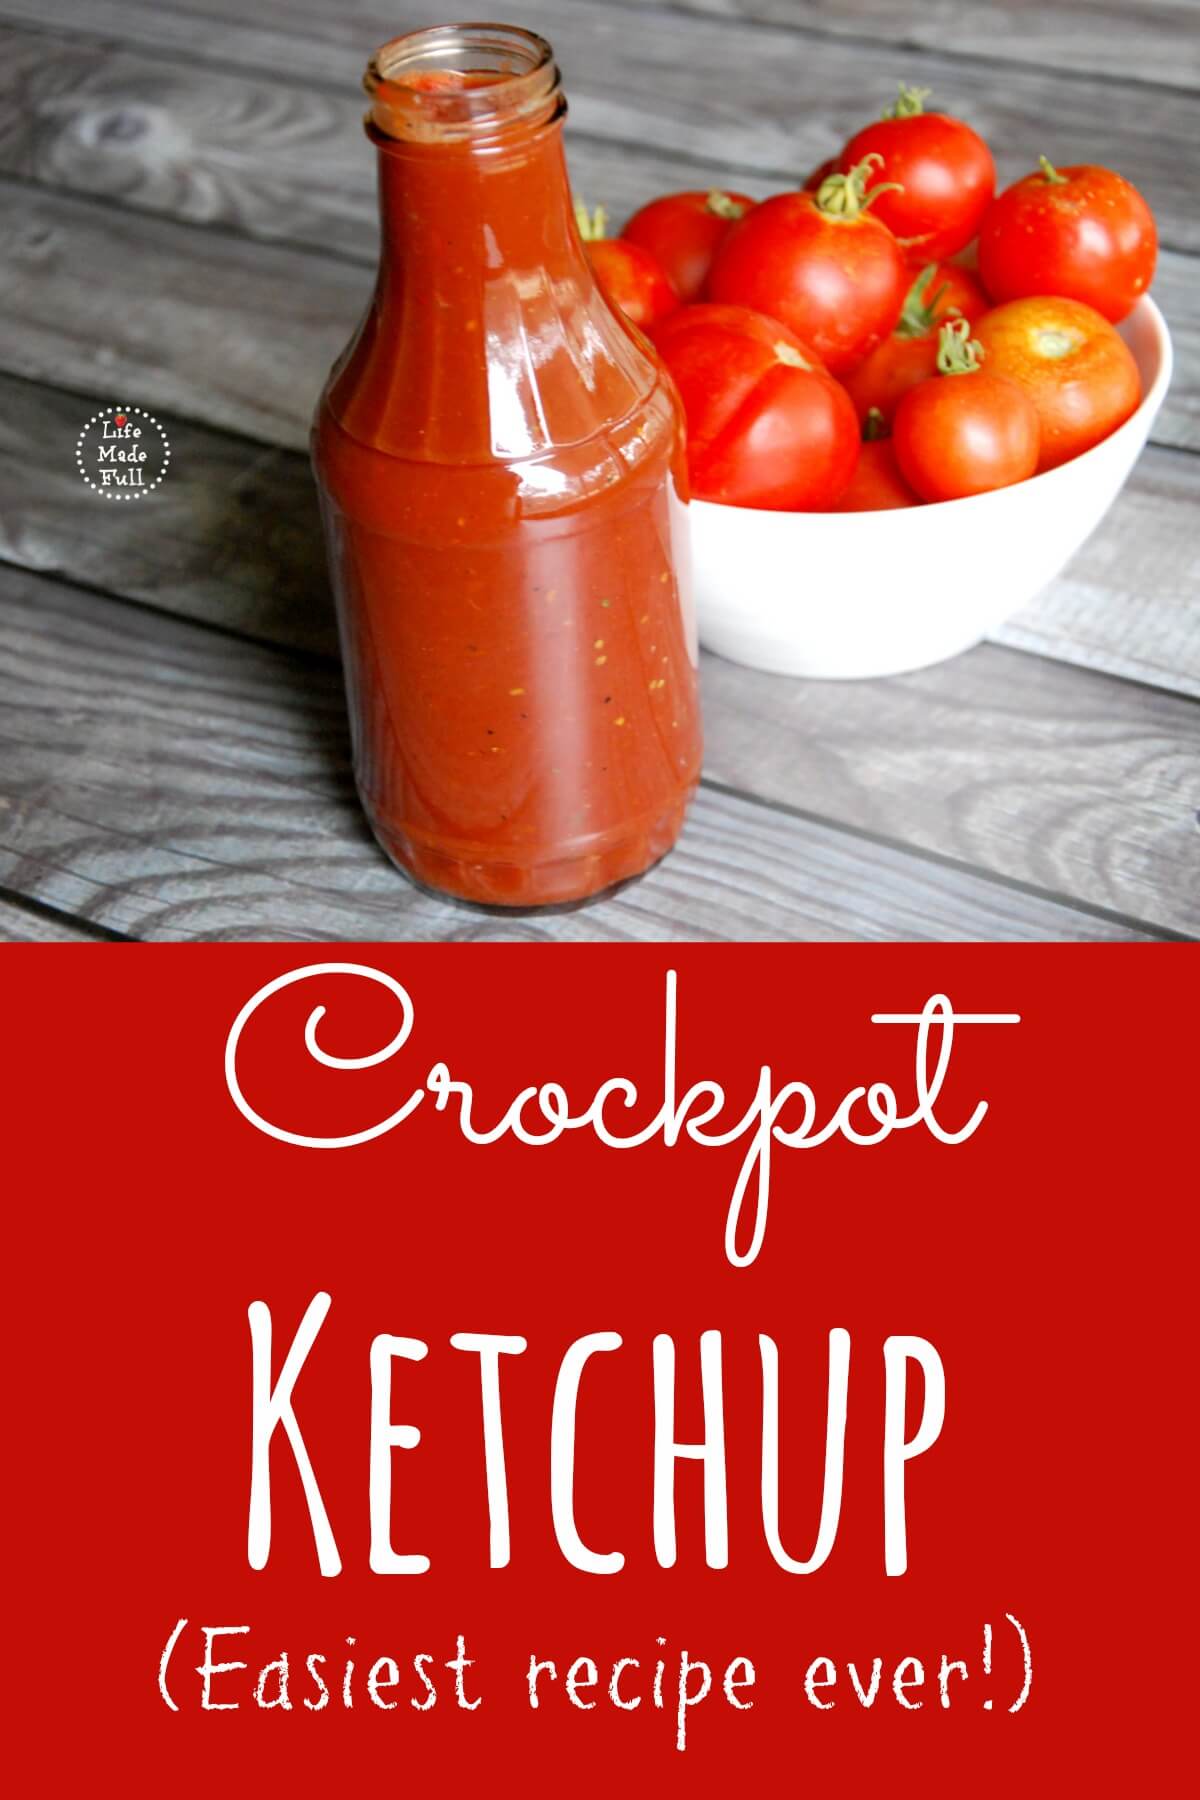 Homemade Ketchup Recipe Made In the Crockpot Old World Garden Farms